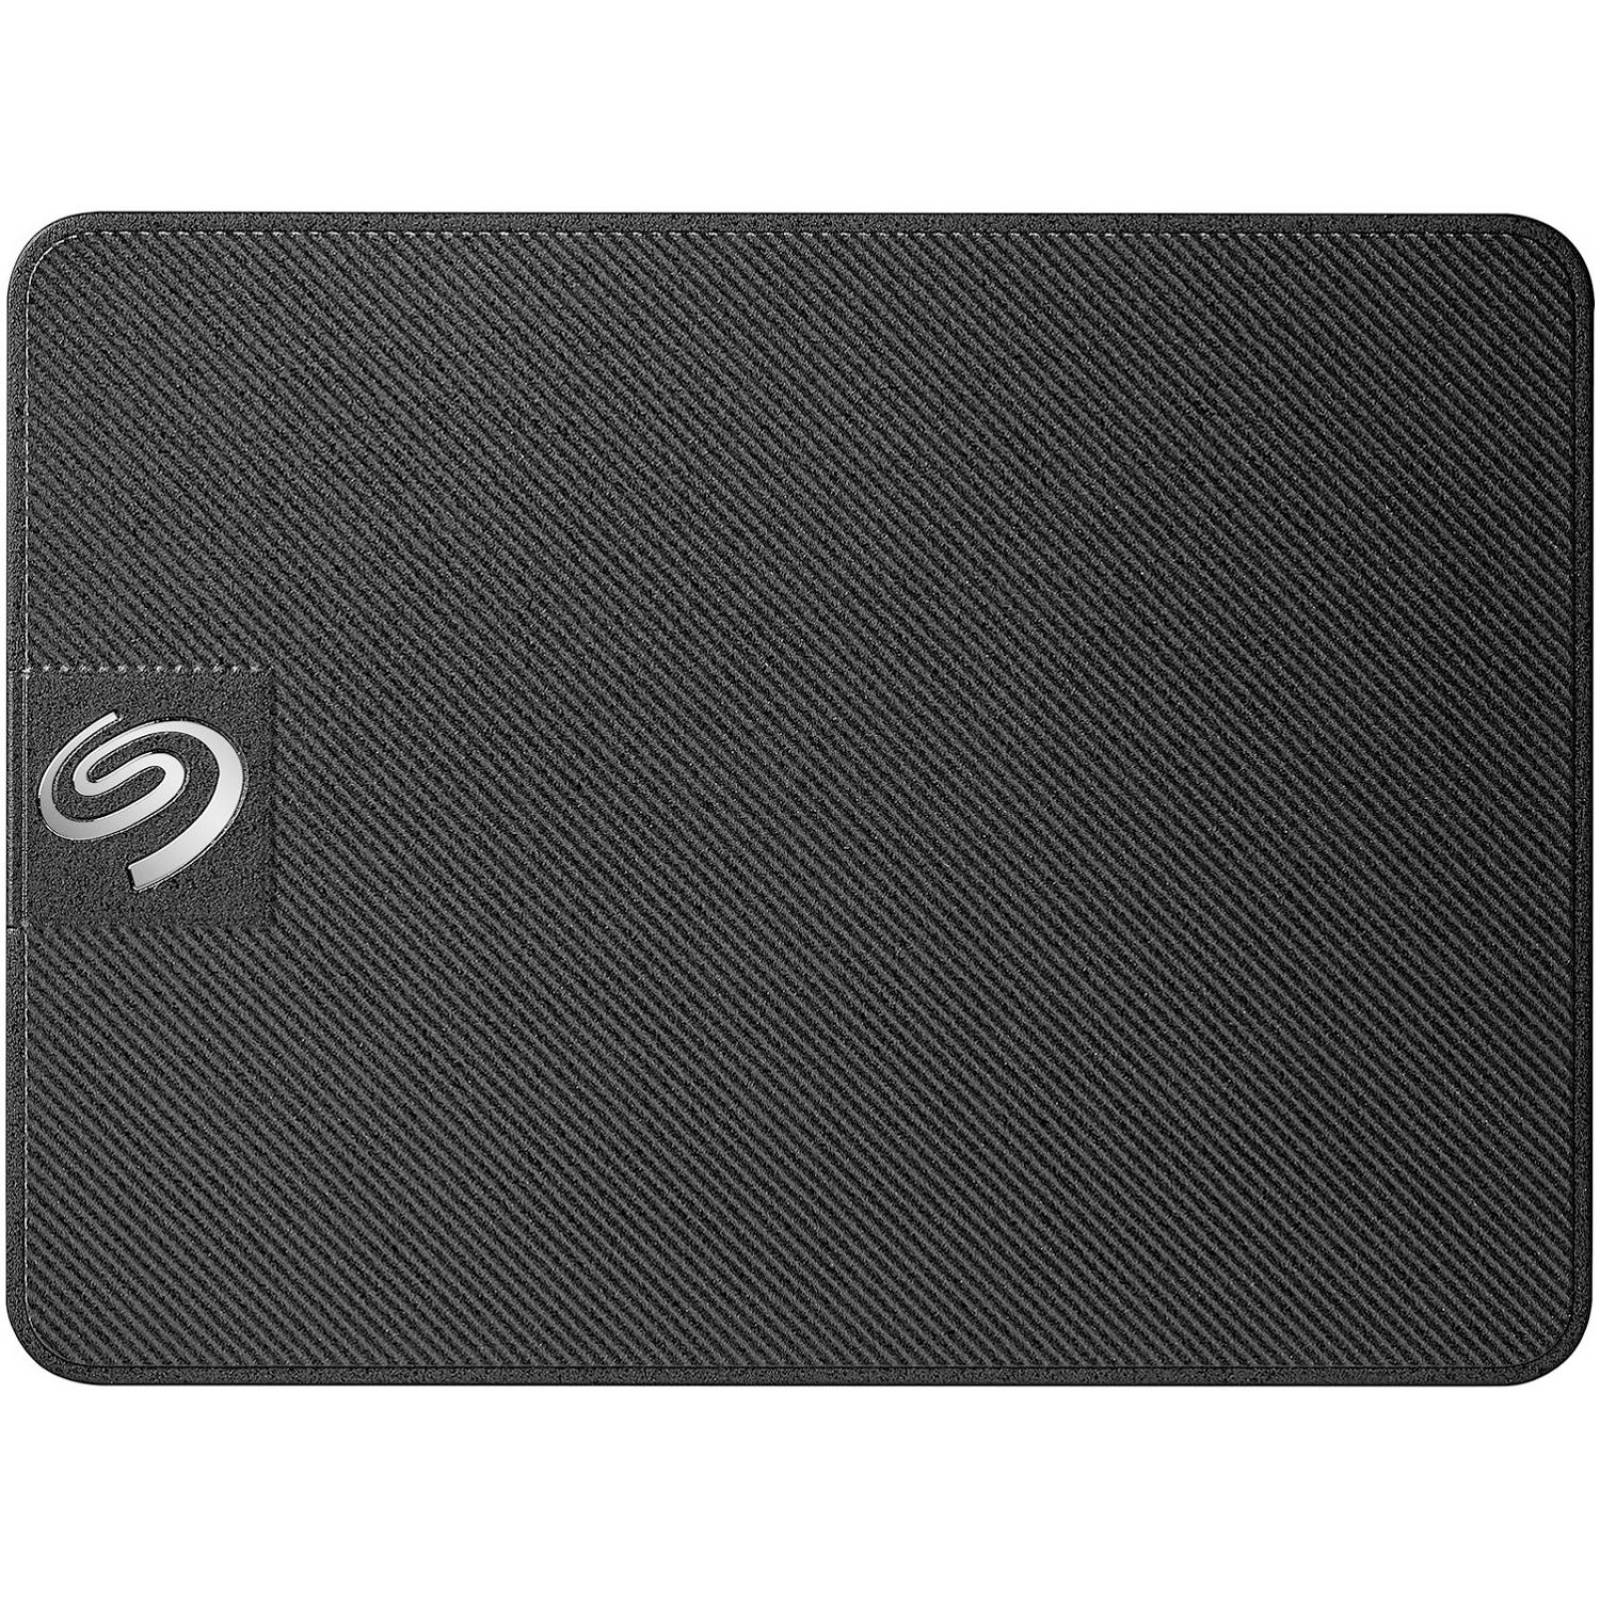 SSD 500GB SEAGATE Expansion Laptop Mac USB 3.0 STJD500400 